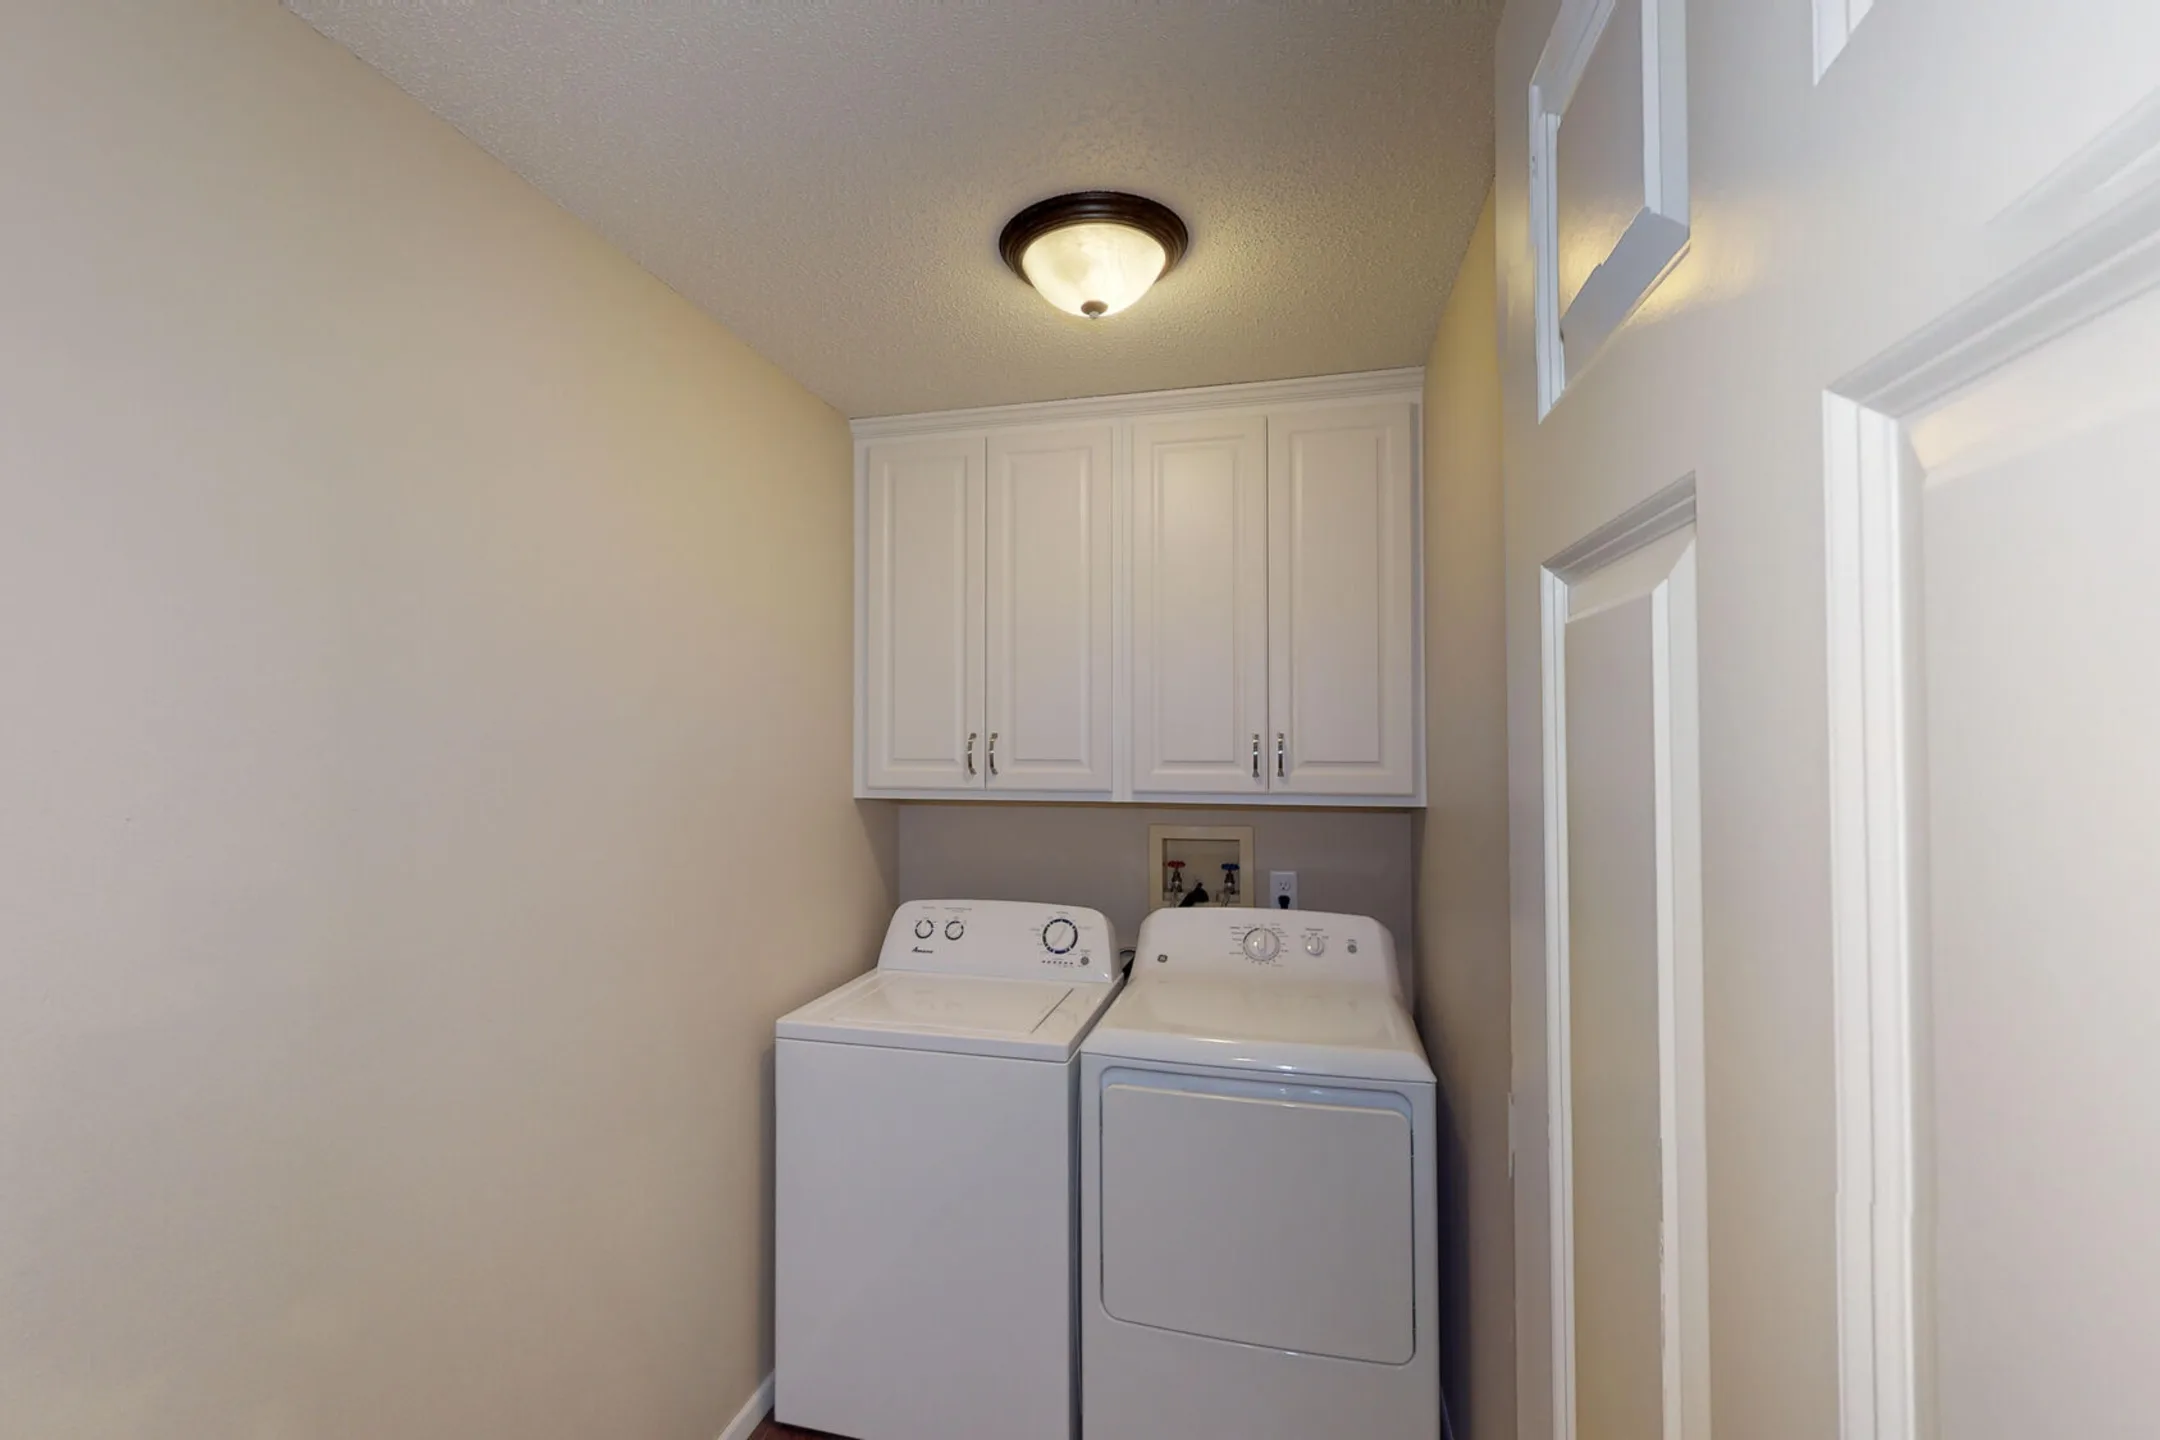 Bathroom - Terrace Hills Apartments - Sioux Falls, SD